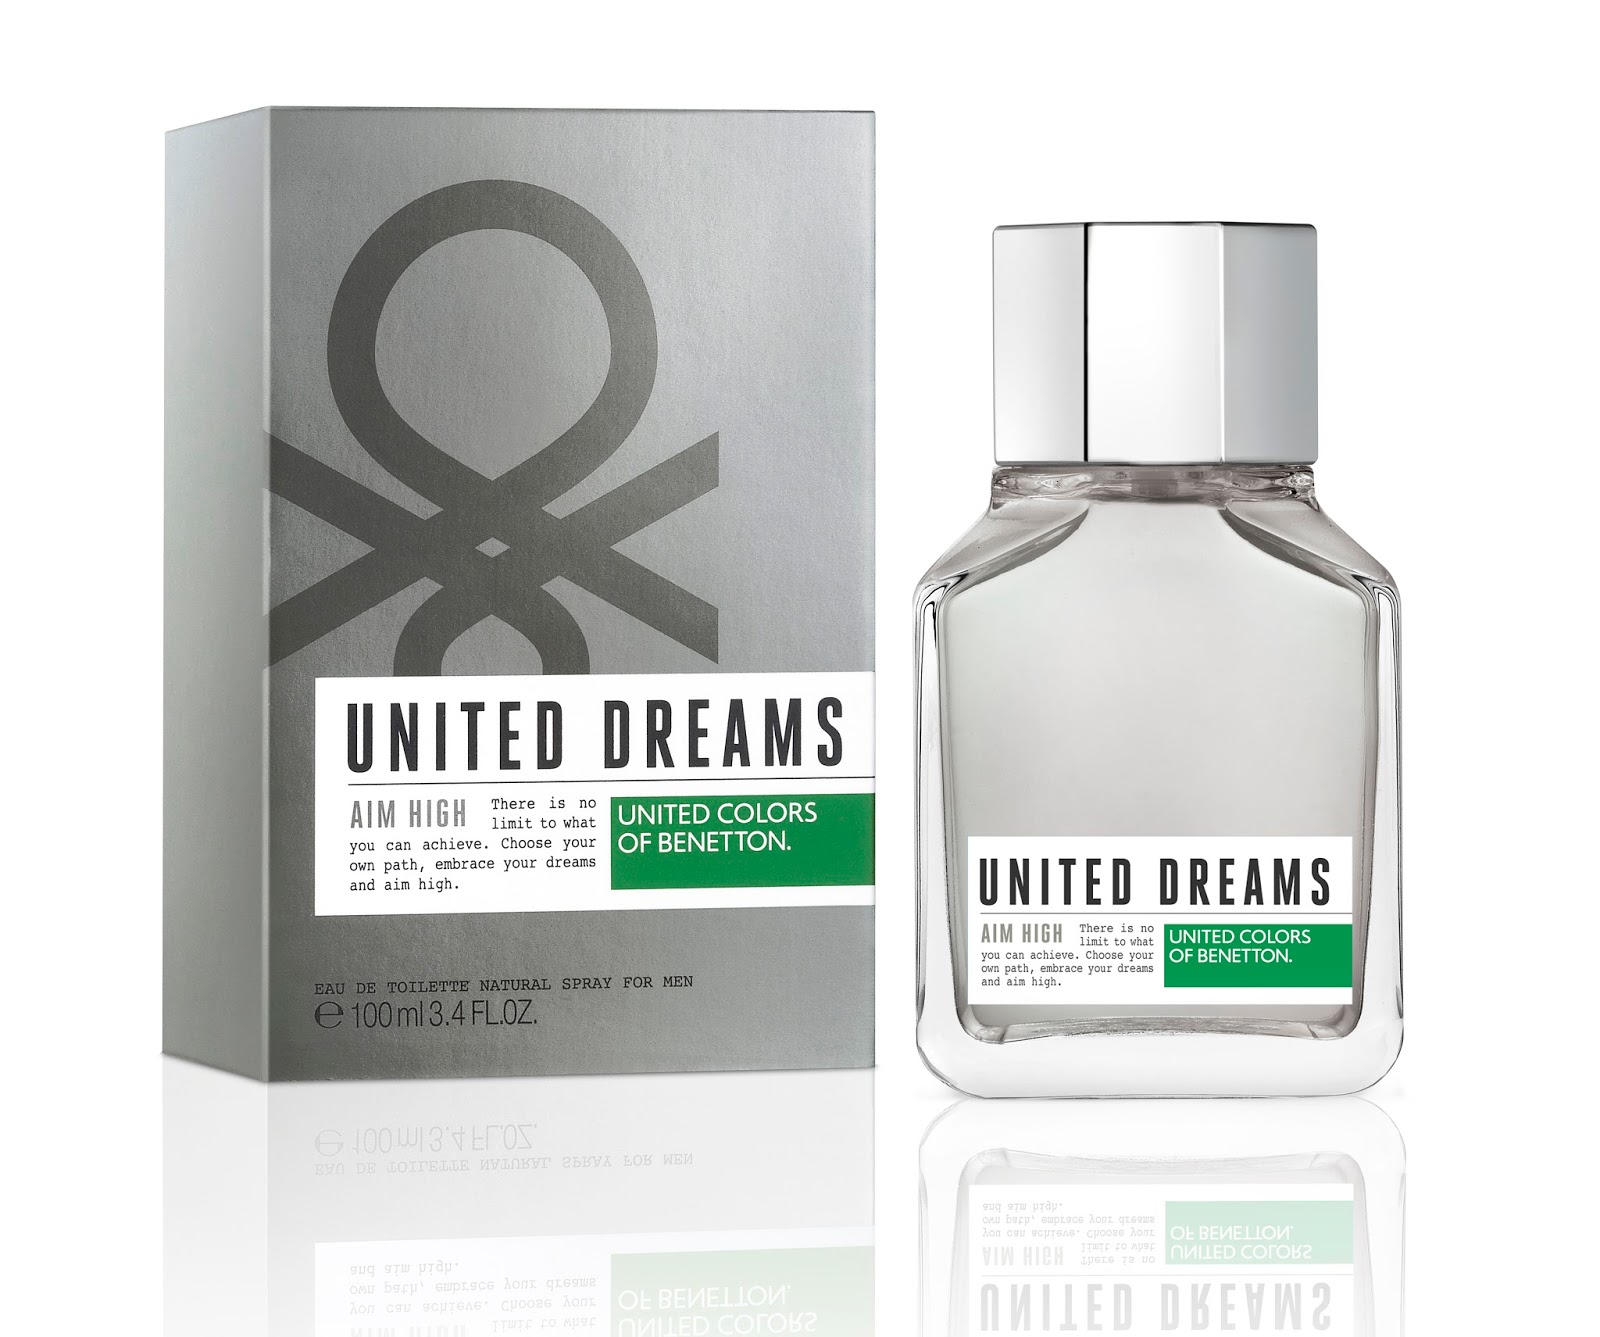 United Dreams Men Aim High Benetton cologne - a fragrance for men 2015